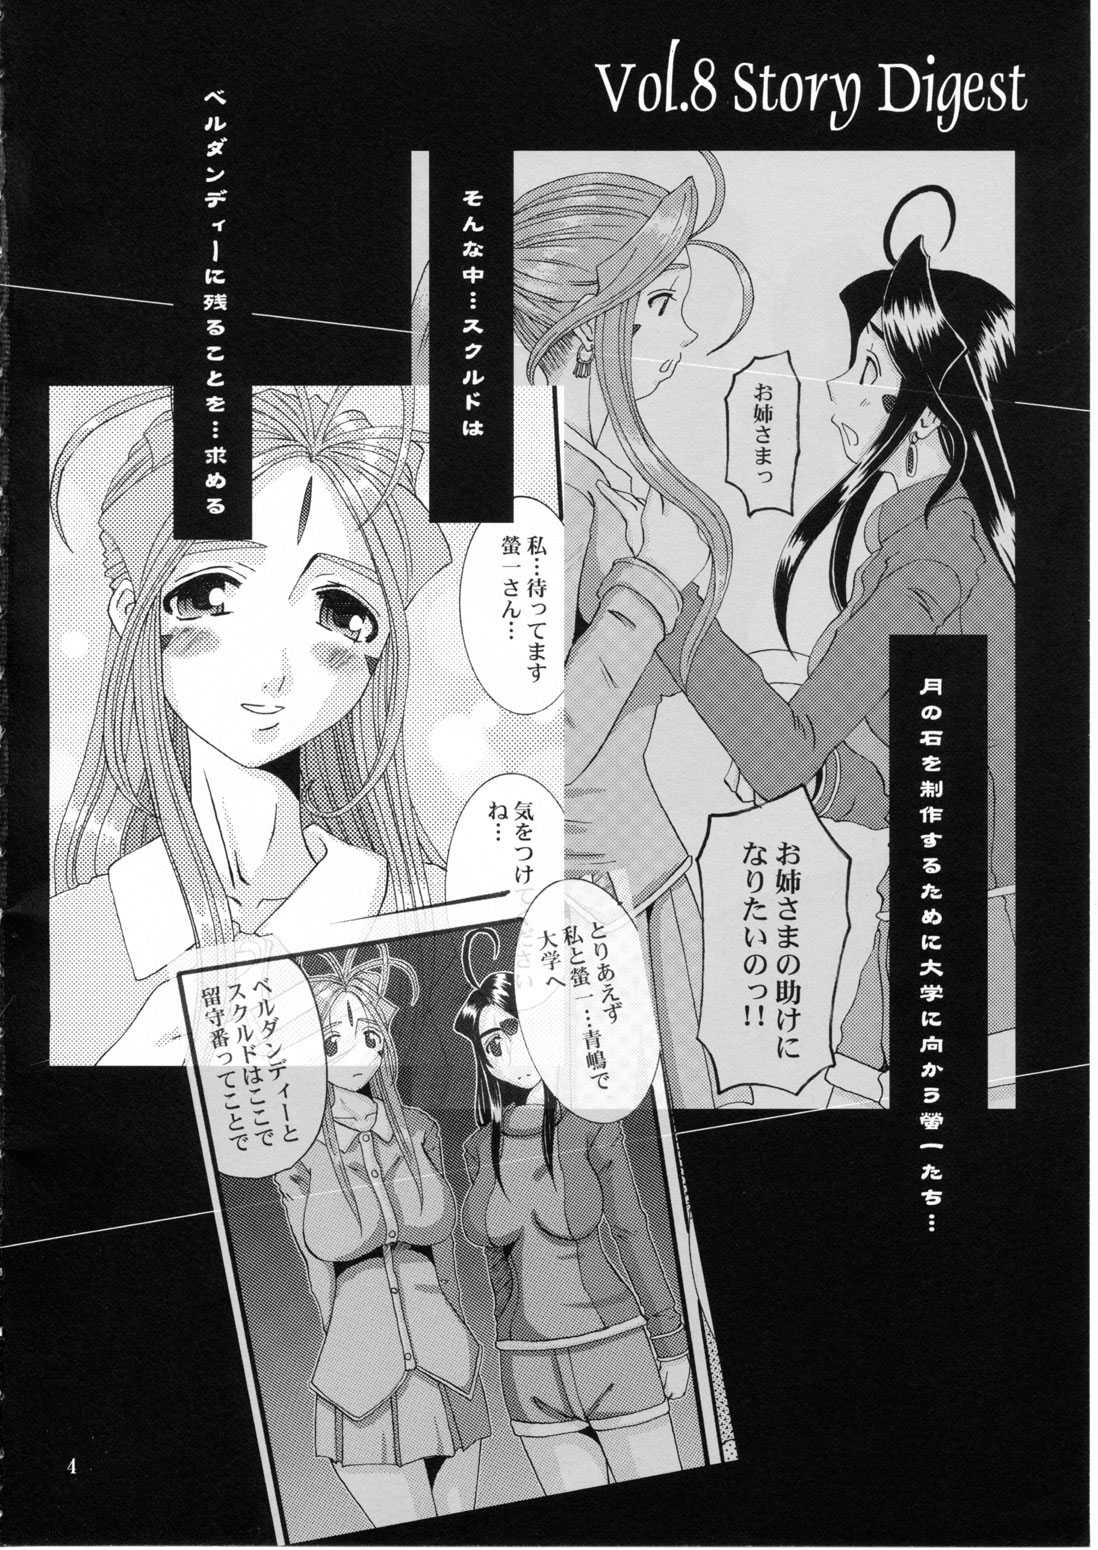 [Tenzan Factory] Nightmare of My Goddess vol.9 (Ah! Megami-sama/Ah! My Goddess) [English] [SaHa] 